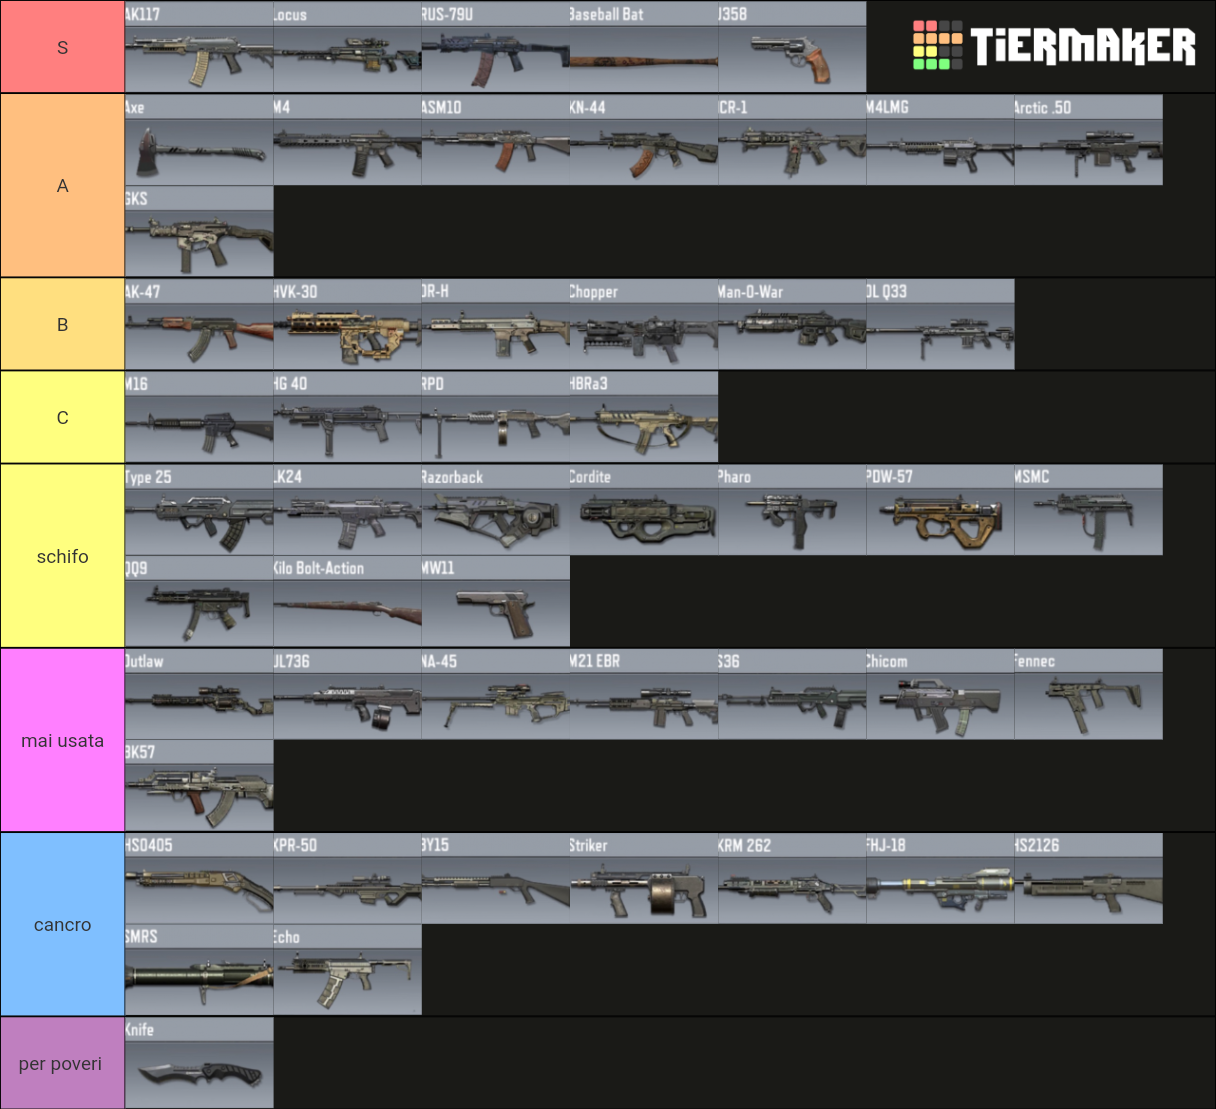 COD Mobile Weapons Tier List Rankings) TierMaker